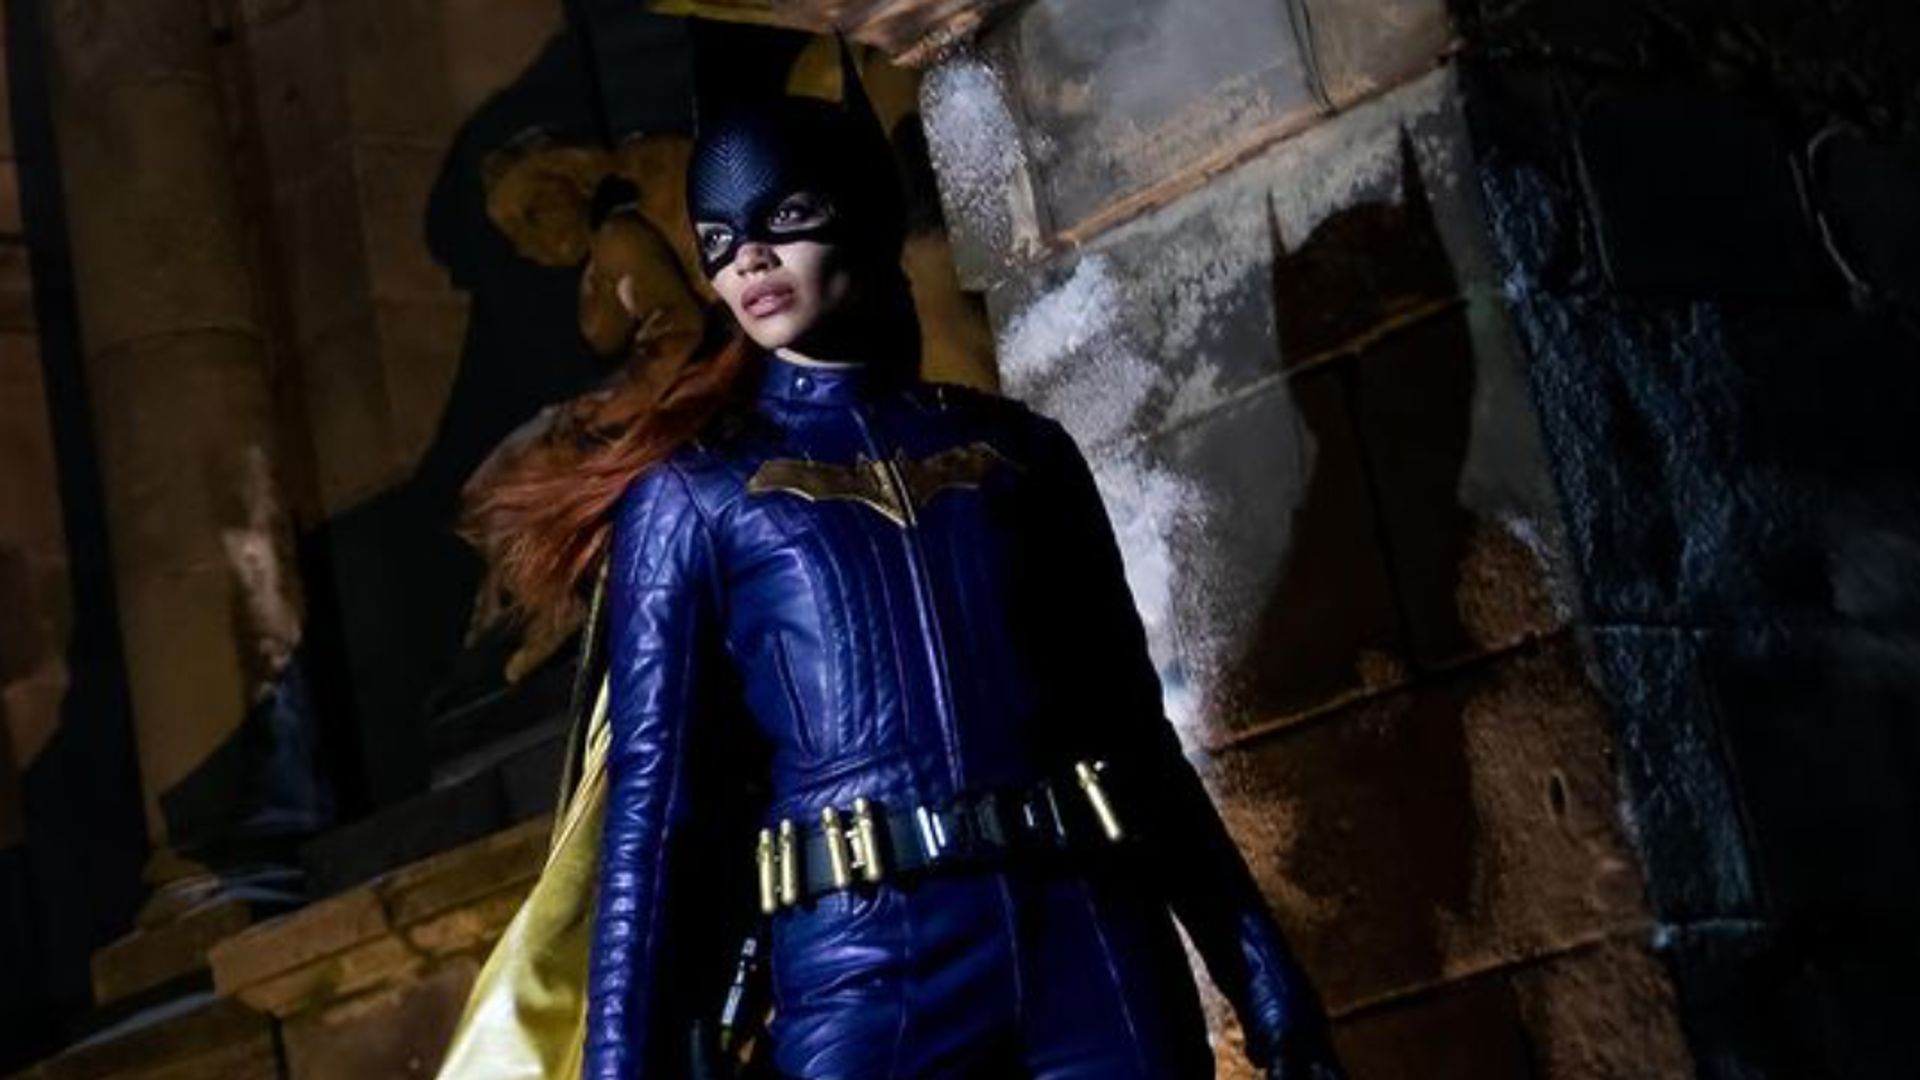 DC Studios head on canceling Batgirl: “it would have hurt DC”